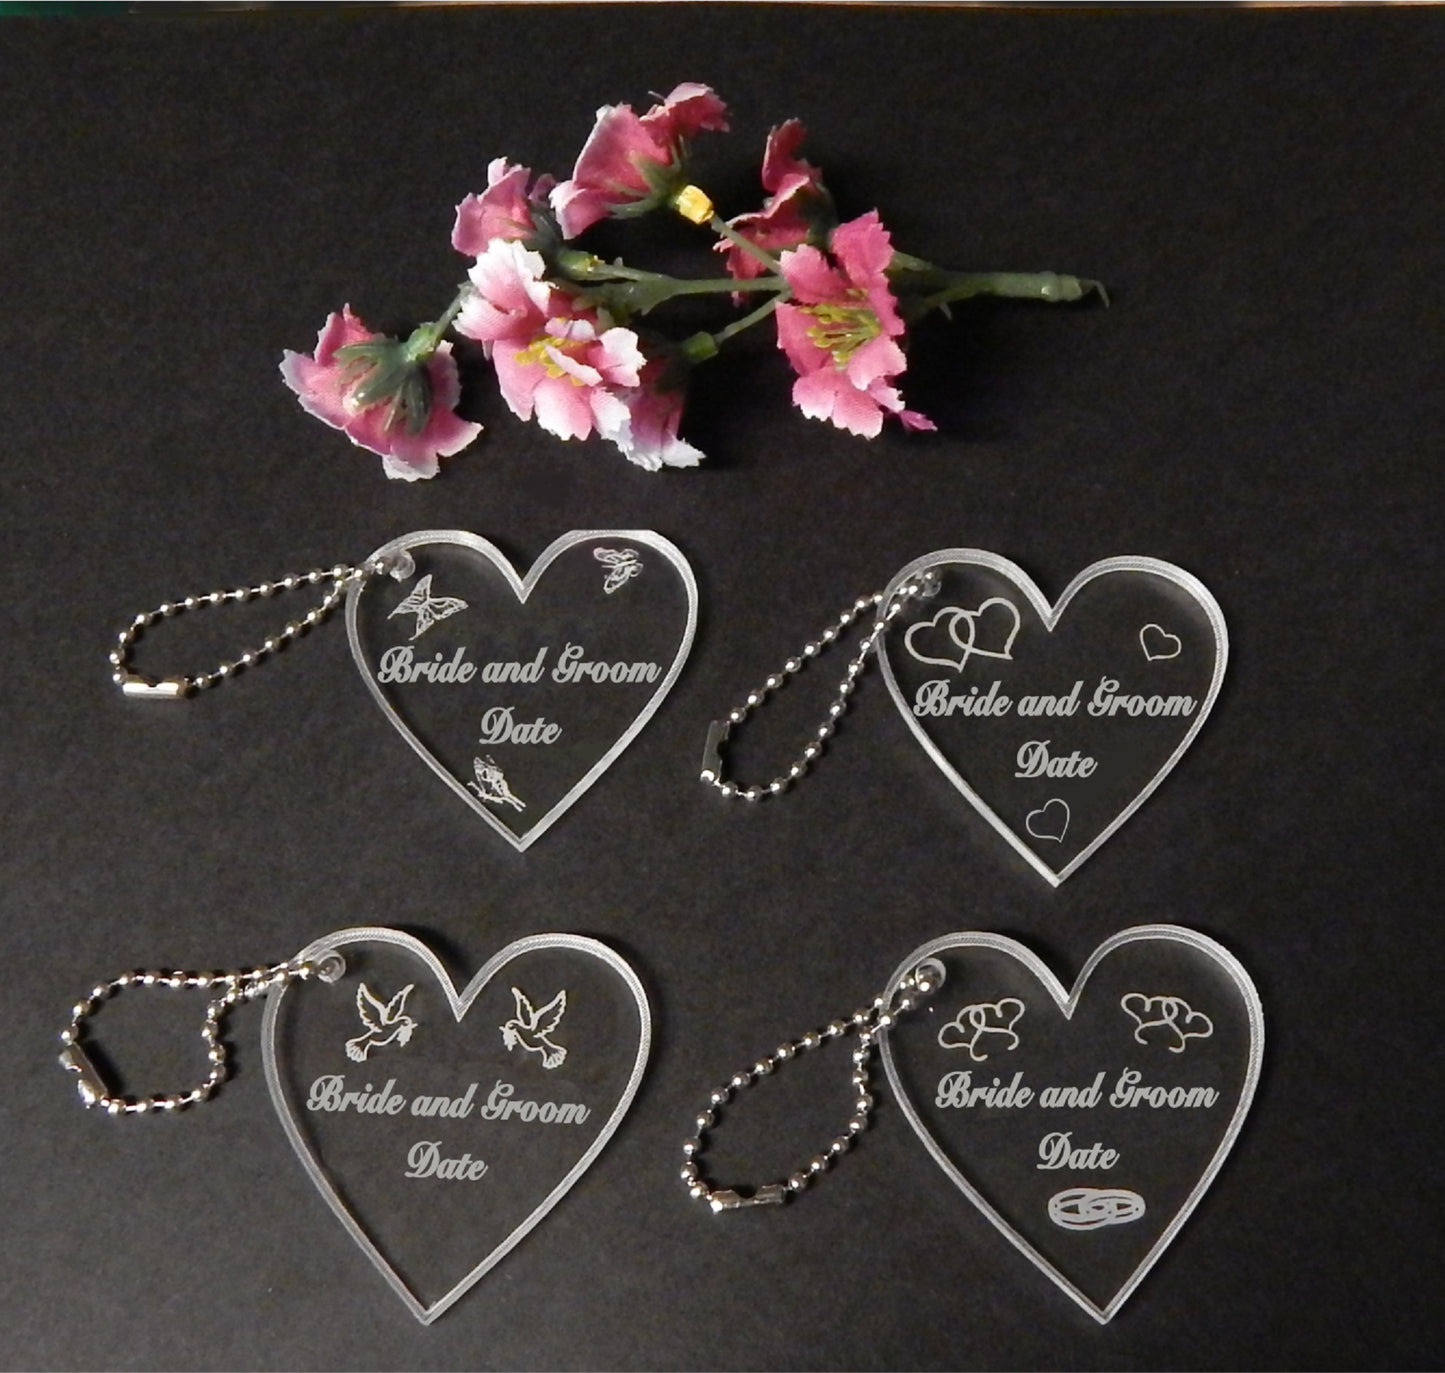 QTY 50 Personalized Heart Wedding or Bridal Key Chain Favors custom engraved acrylic keychains